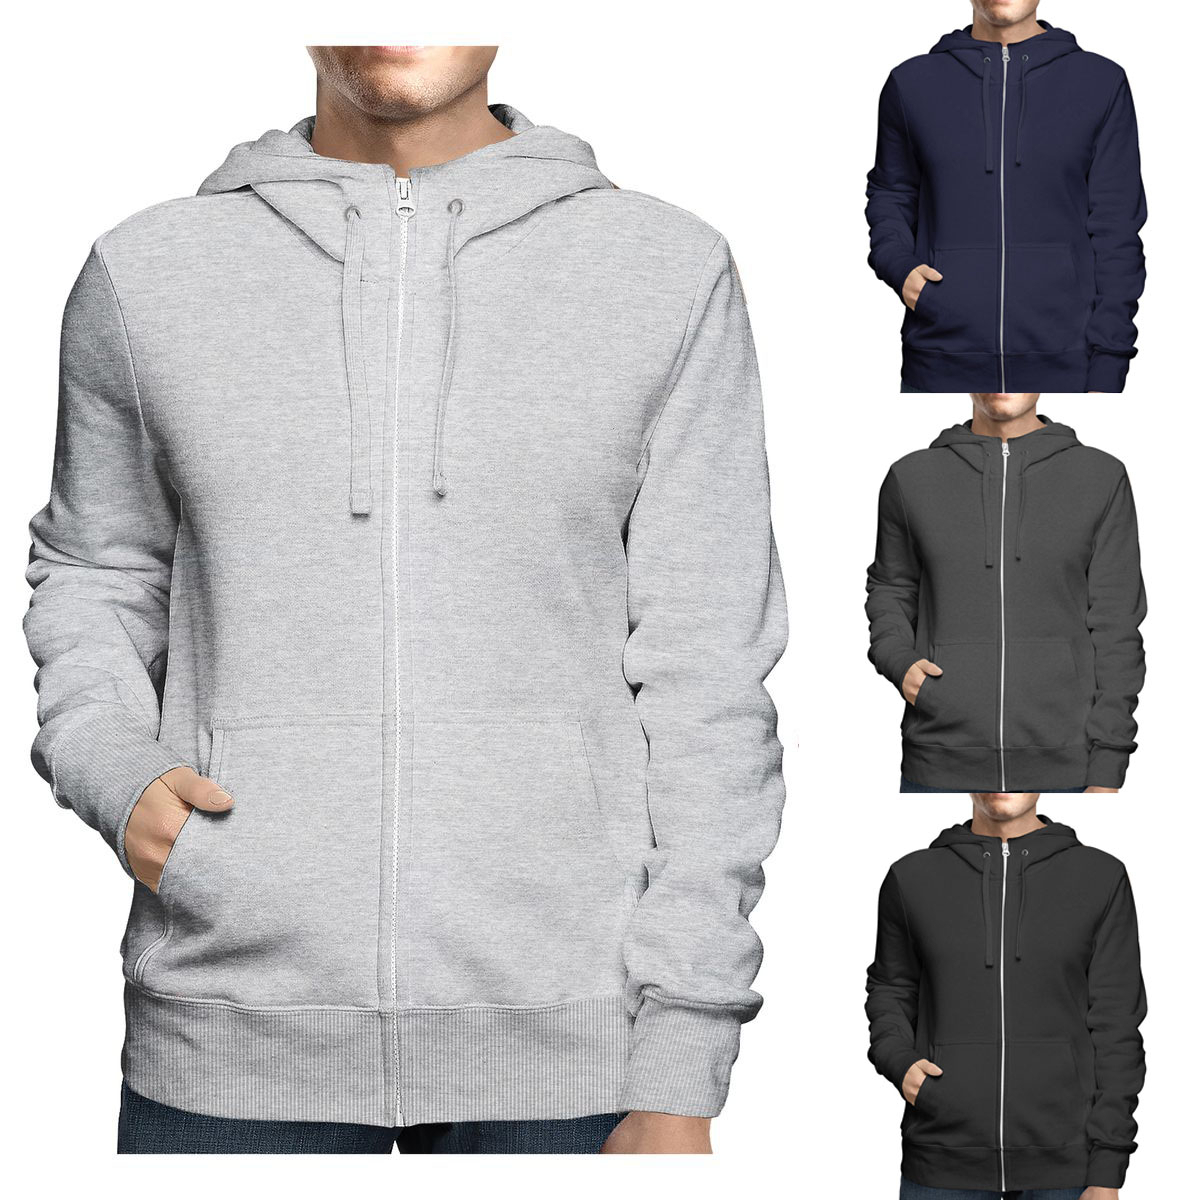 Multi-Pack: Men's Premium Soft Cozy Full Zip-Up Fleece Lined Hoodie Sweatshirt - 2-pack, Medium